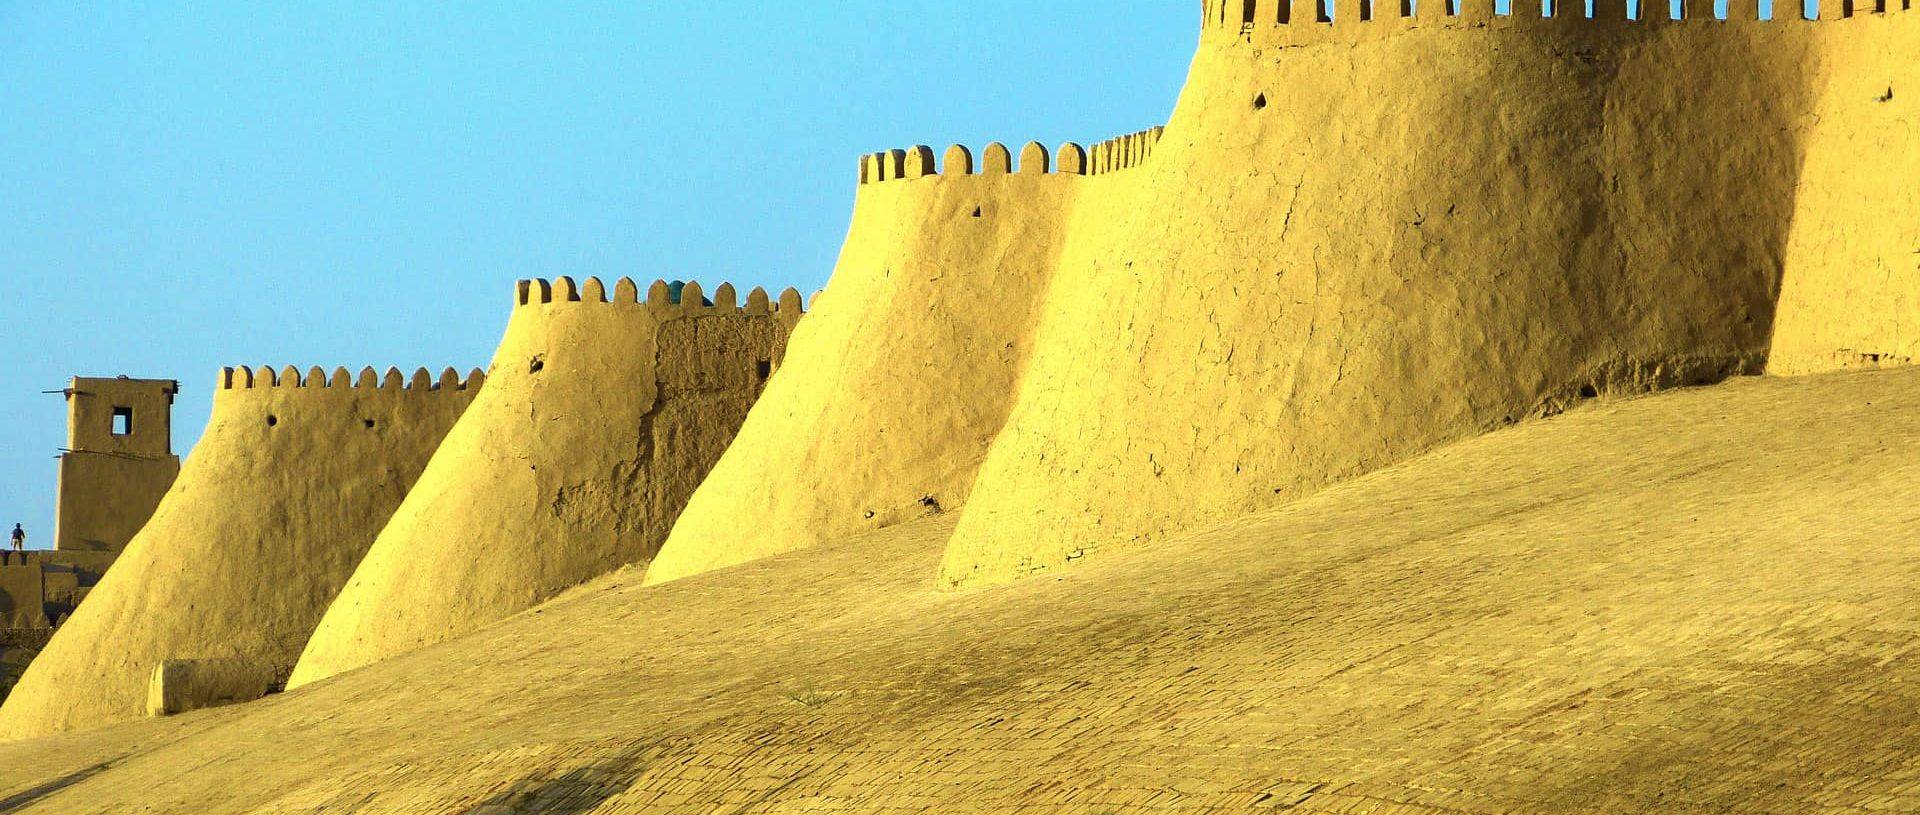 Khiva, Uzbekistan.jpg